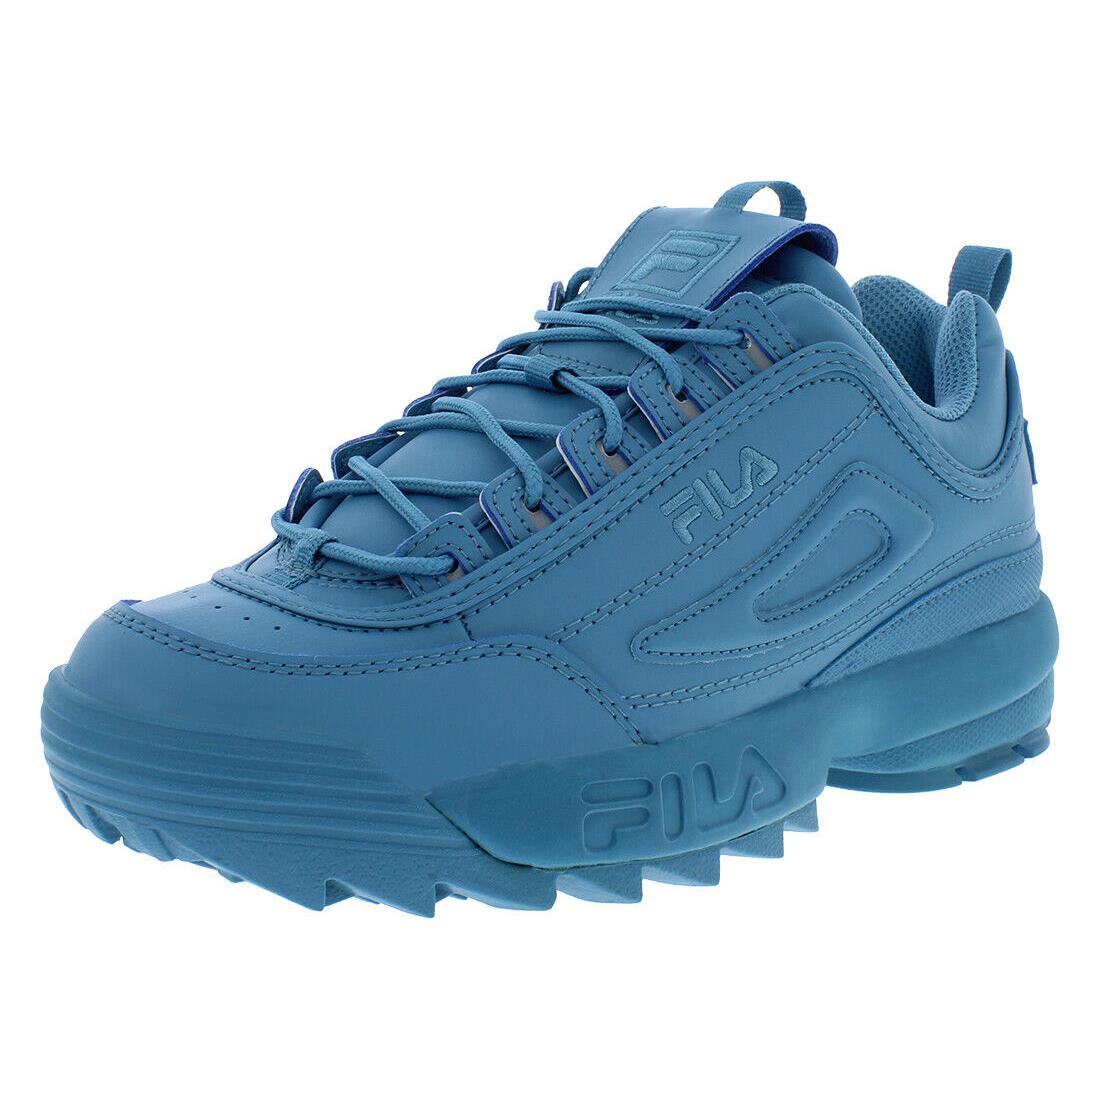 Fila Disruptor II Premium Womens Shoes - Main: Blue